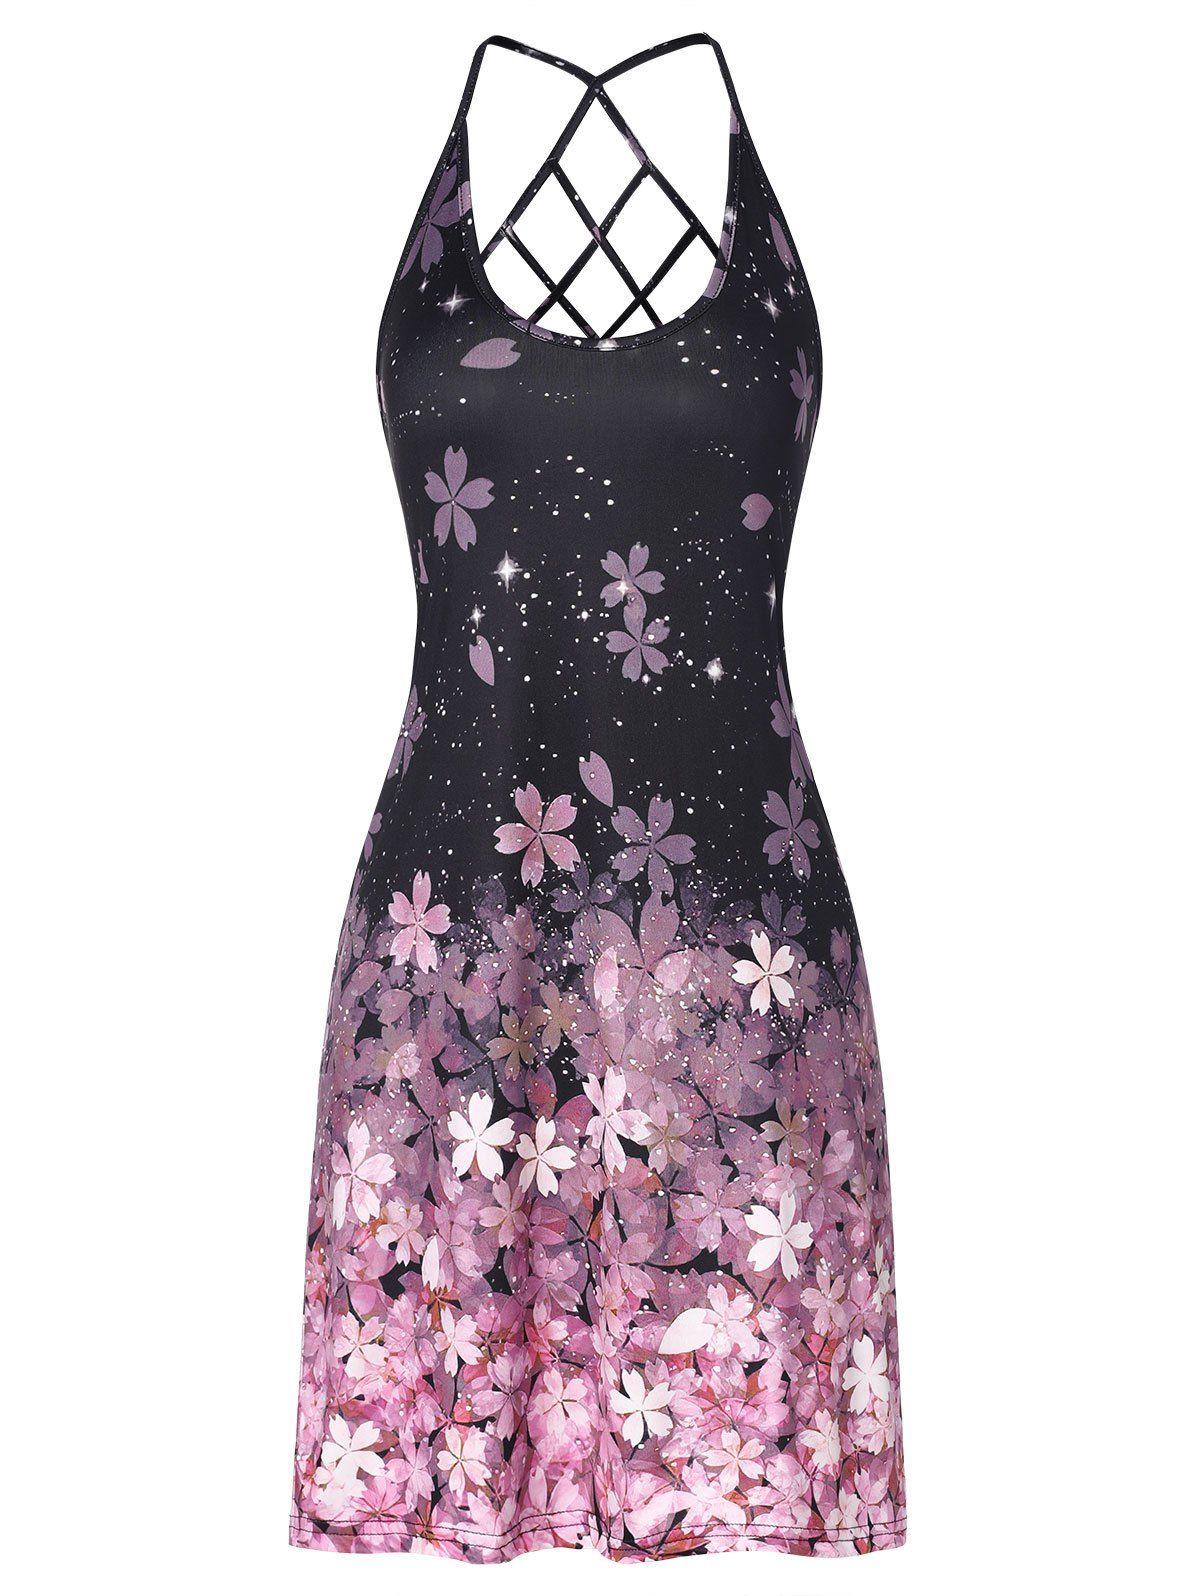 Floral Print Lattice Cutout Cami Dress - BLACK M